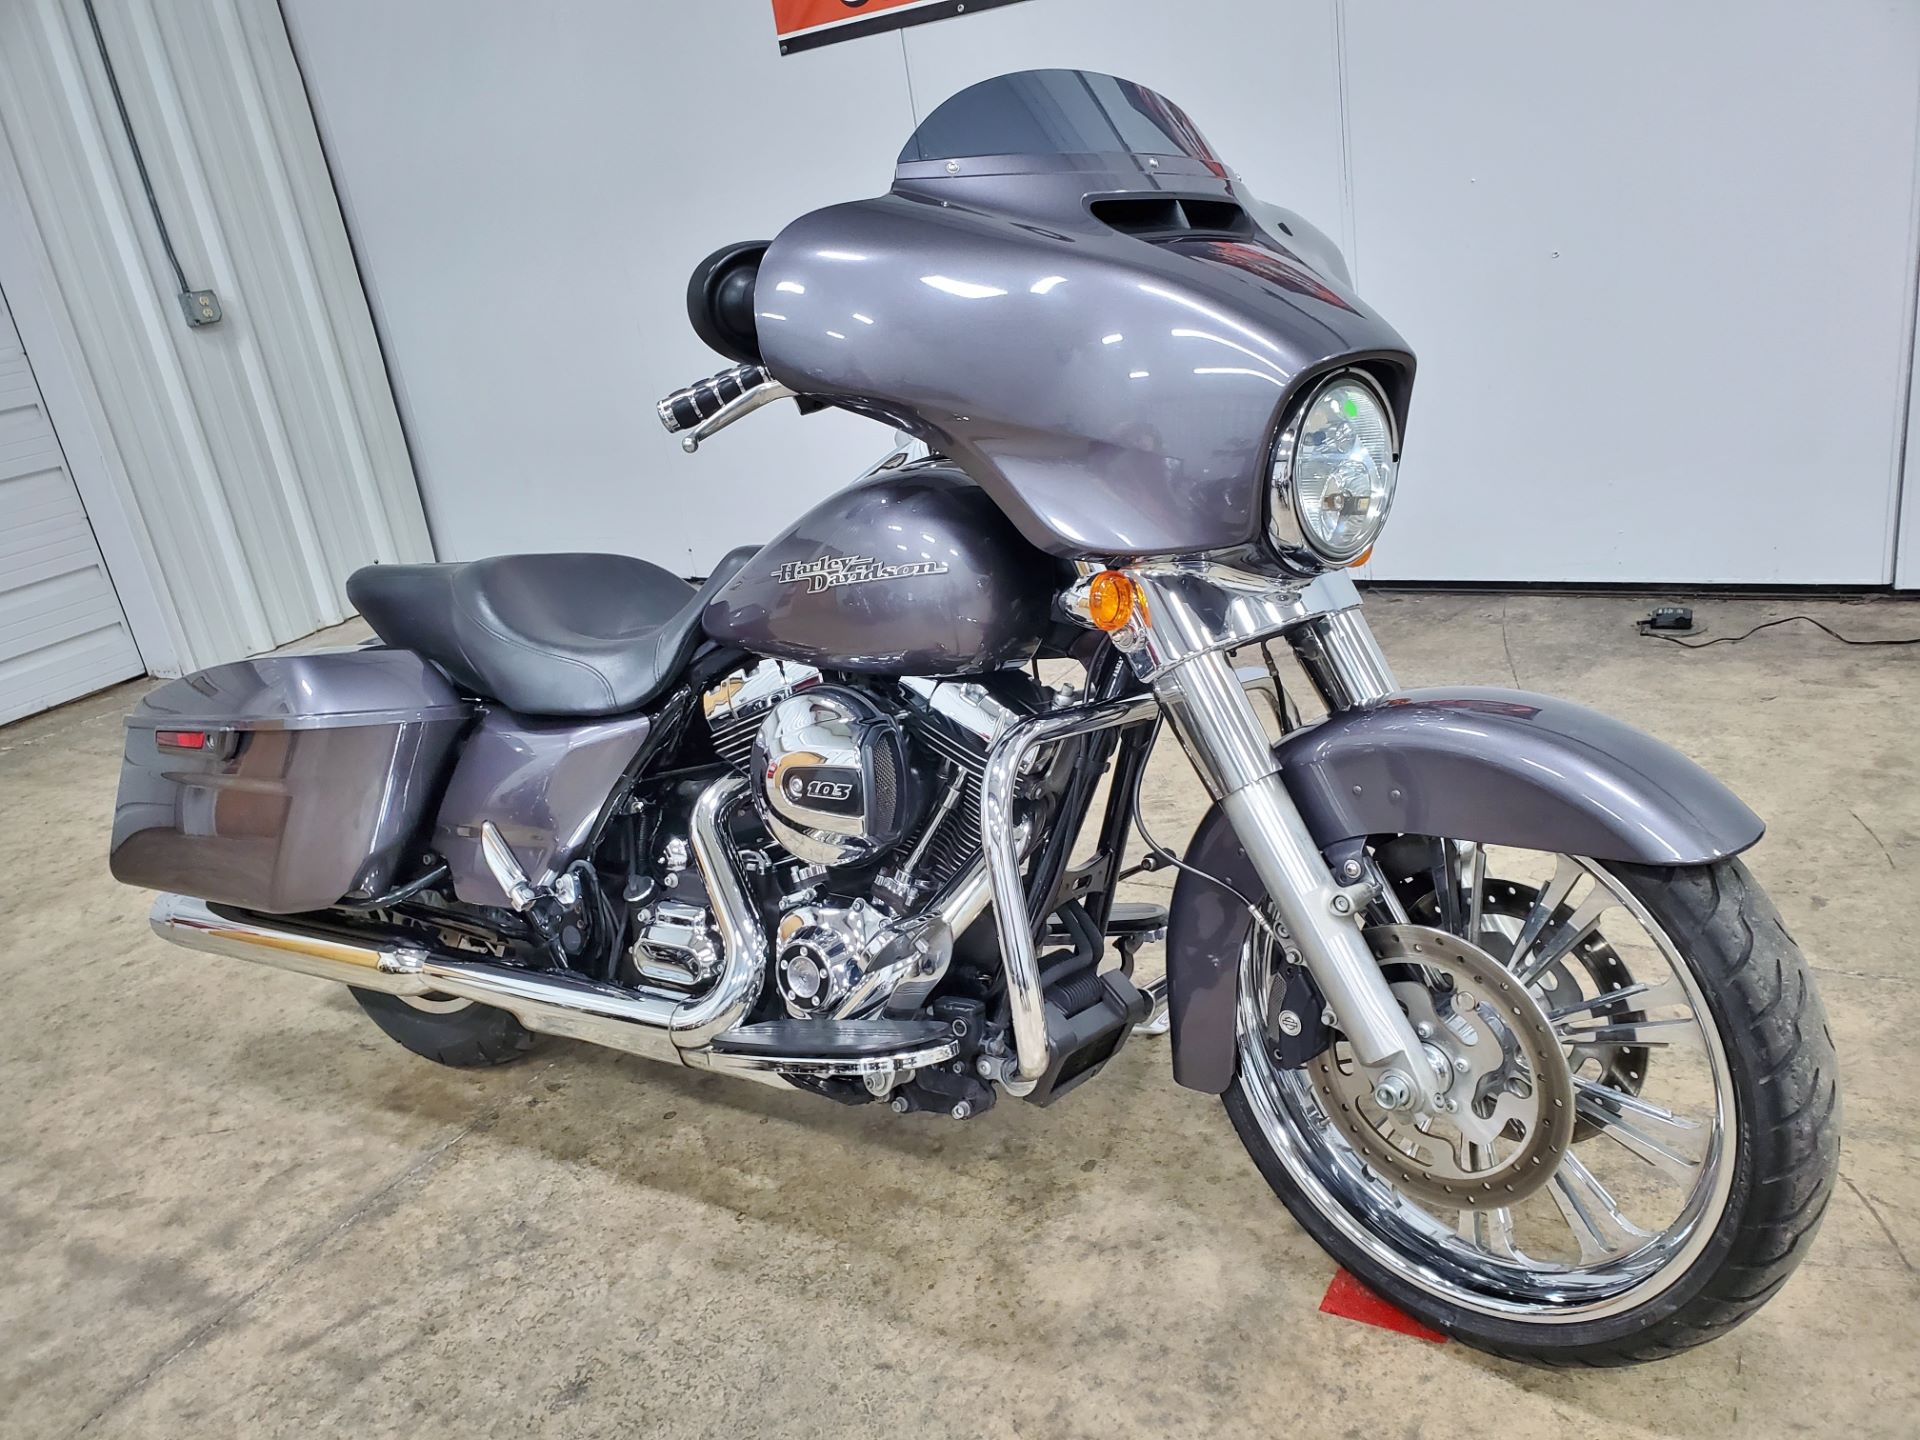 2014 Harley-Davidson Street Glide® in Sandusky, Ohio - Photo 3